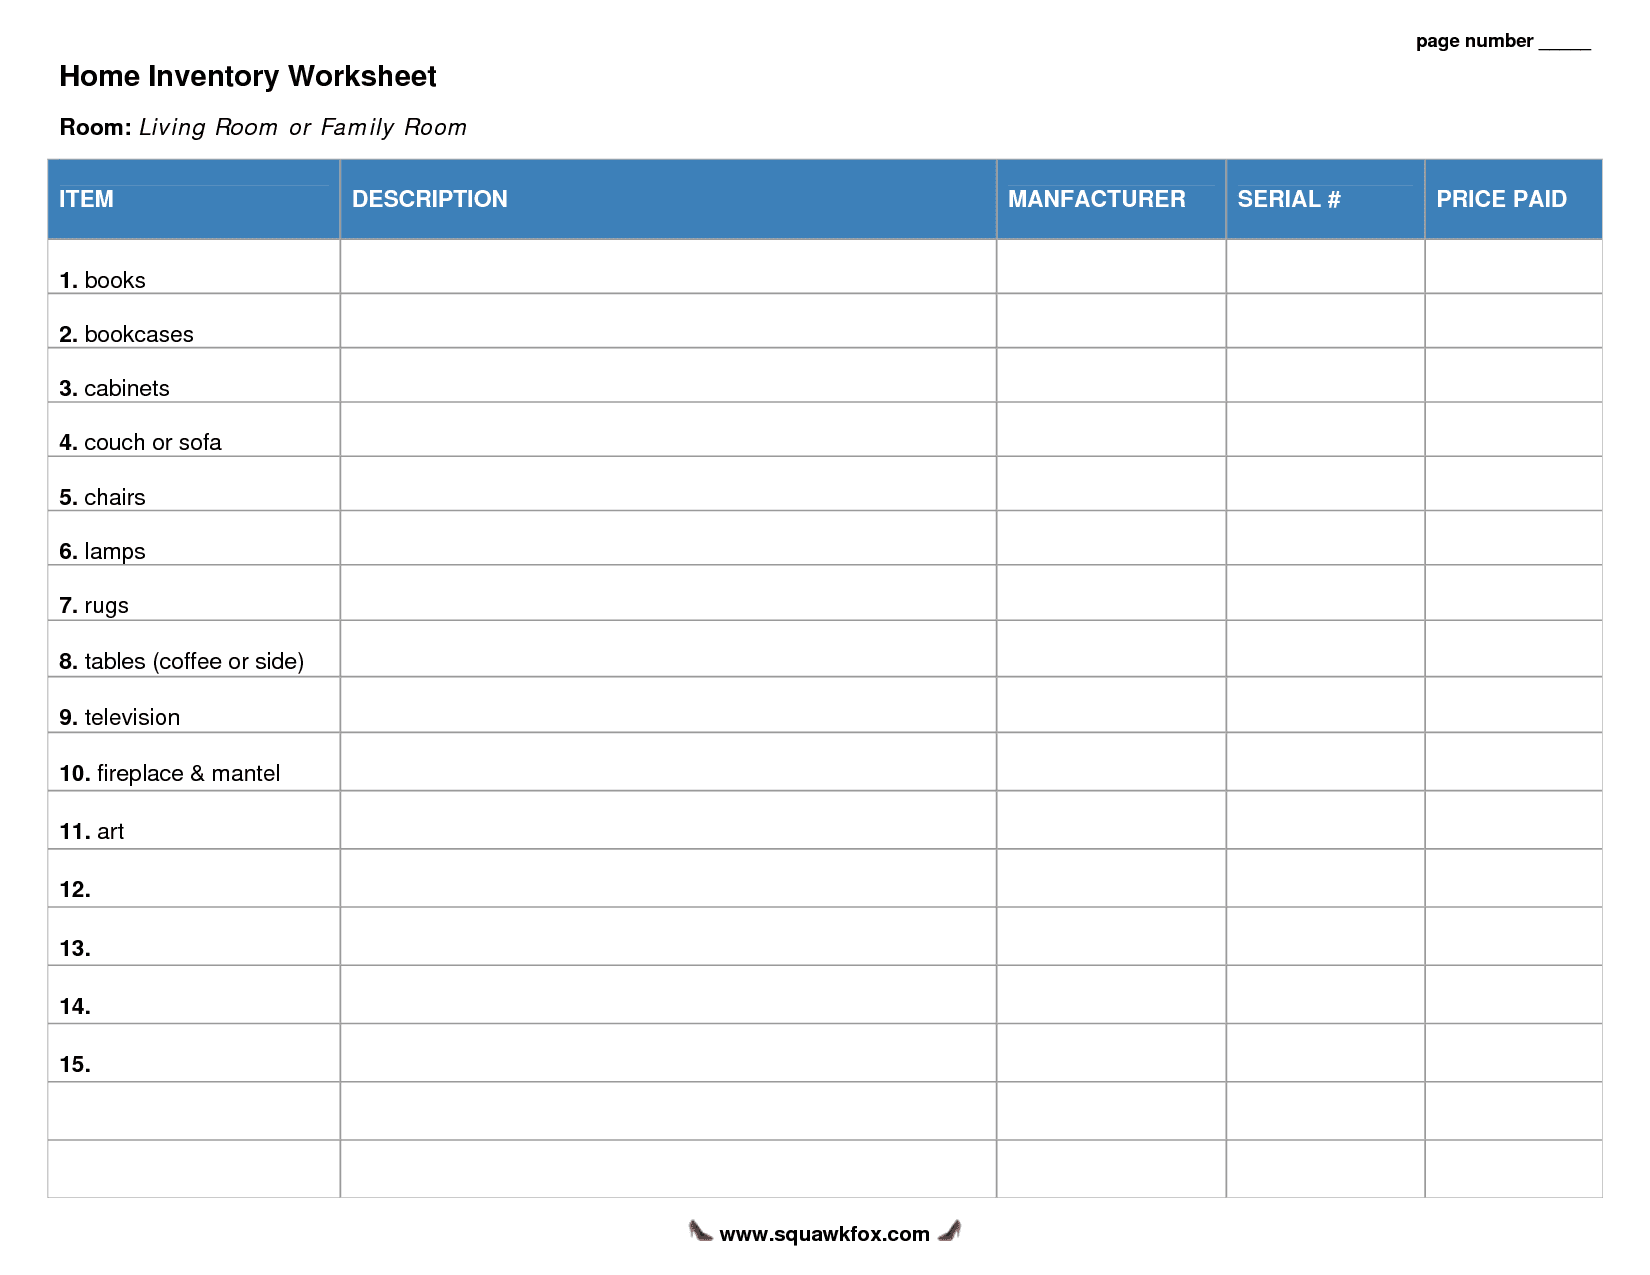 printable blank excel spreadsheet templates